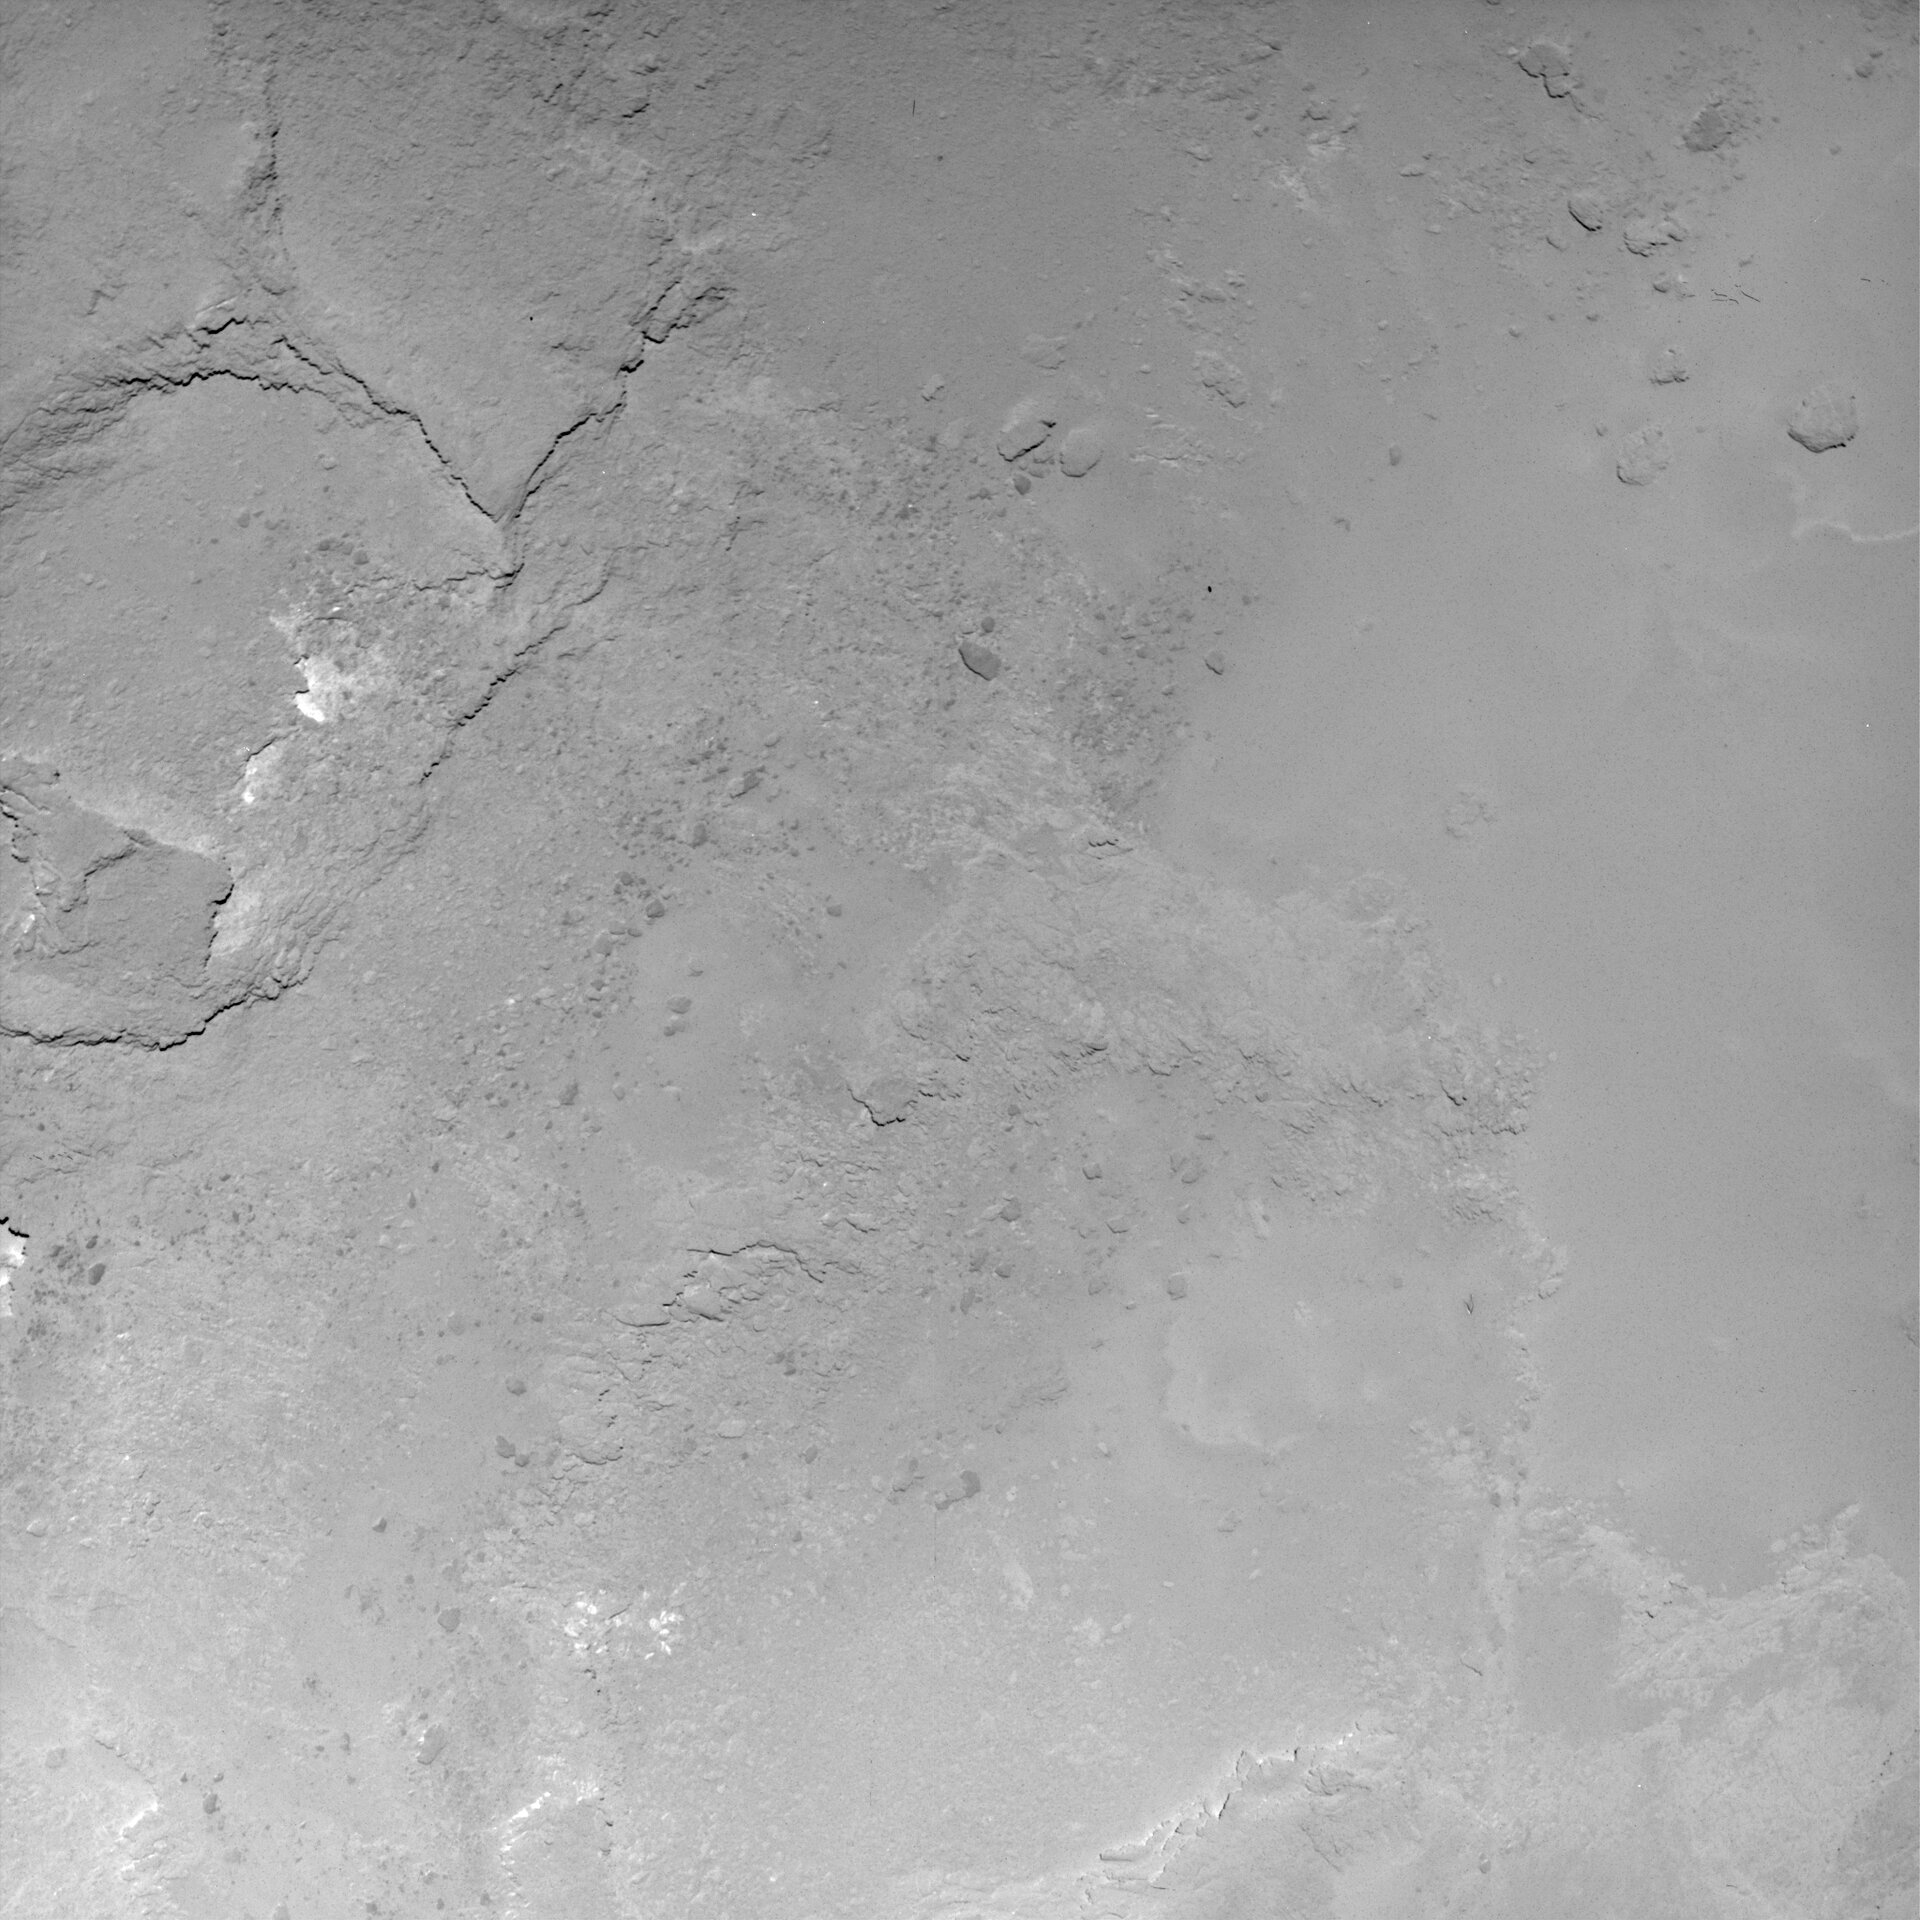 Comet on 10 April 2016 – OSIRIS narrow-angle camera 